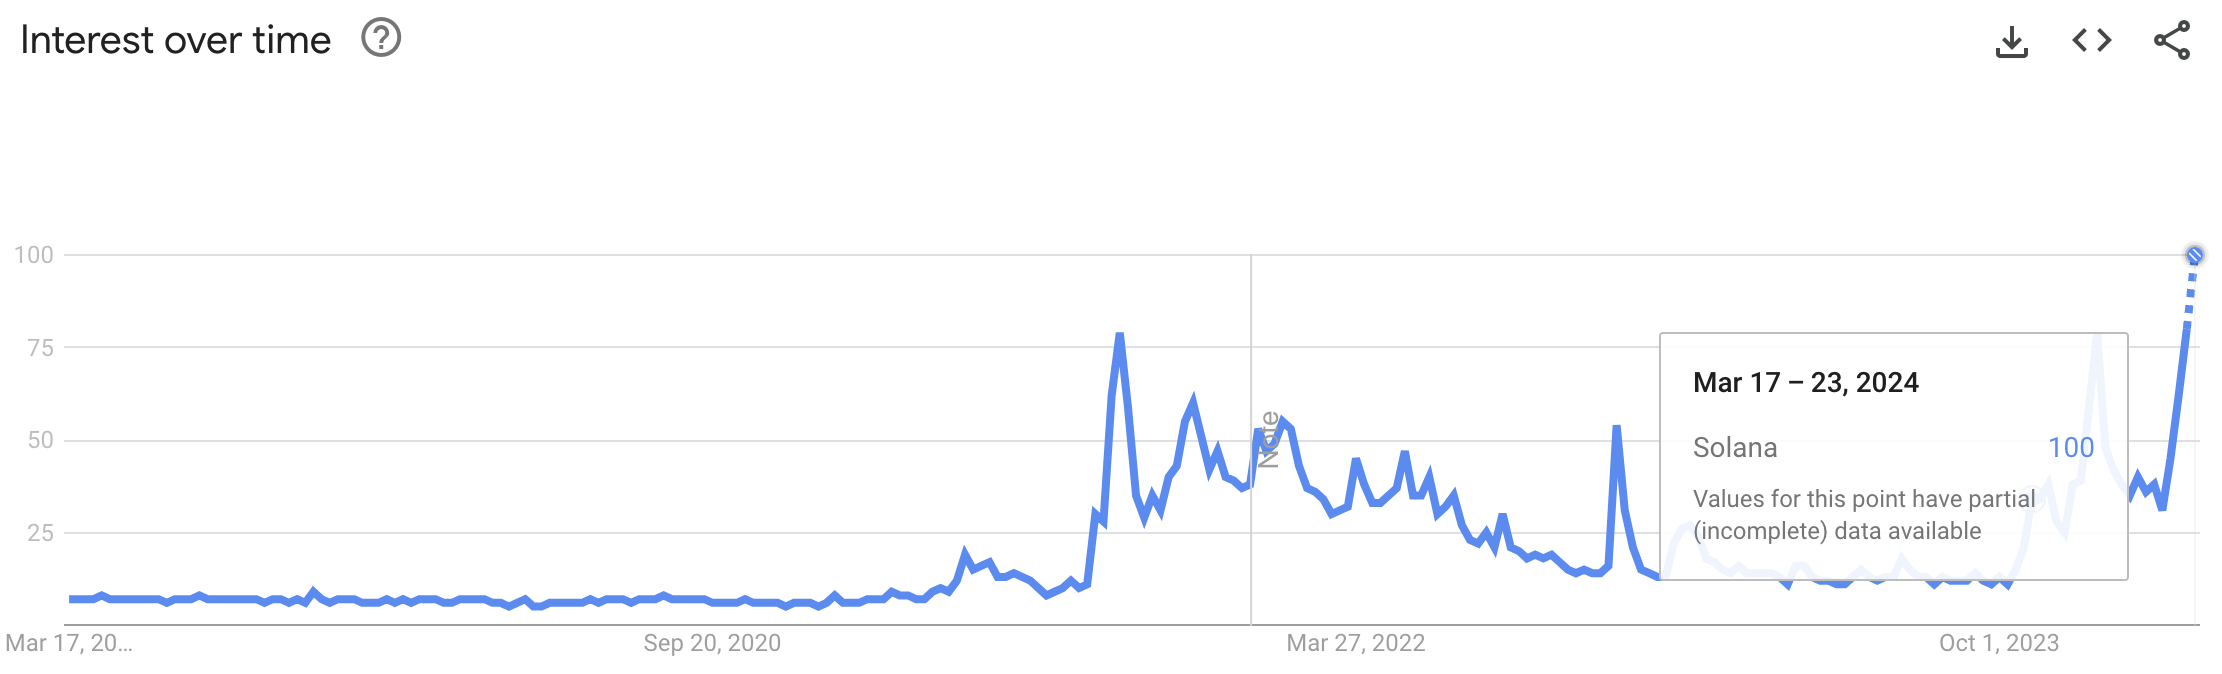 Solana一词在谷歌趋势的搜索热度已达到100，创历史最高值